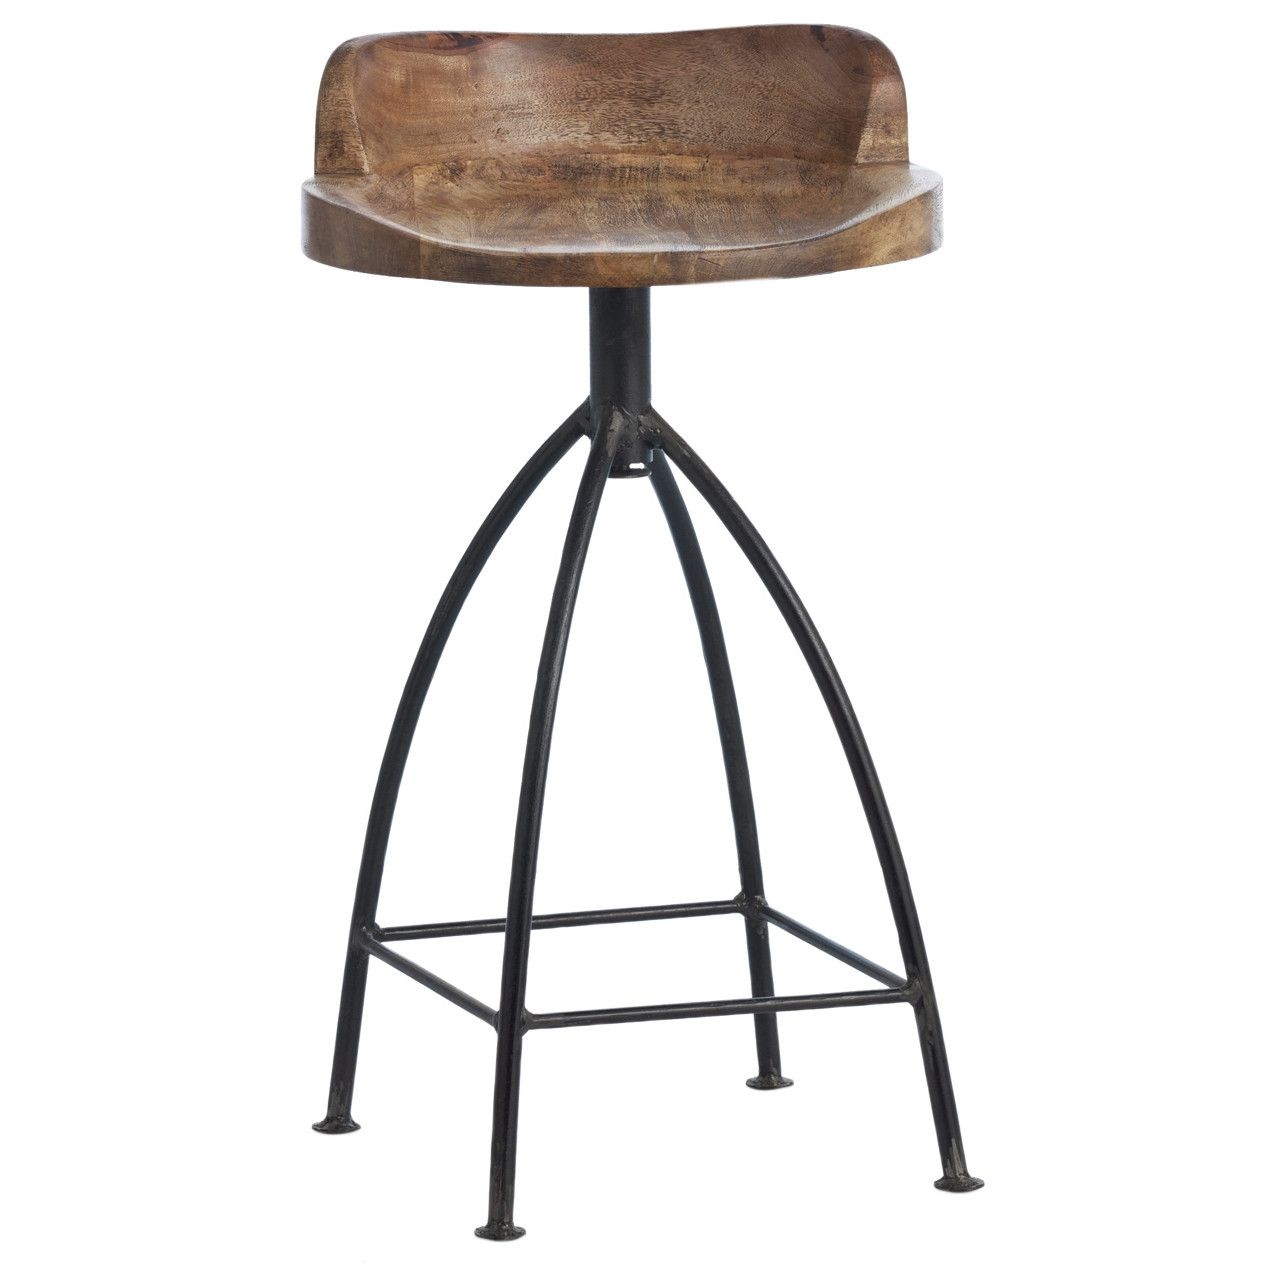 Steampunk bar stools